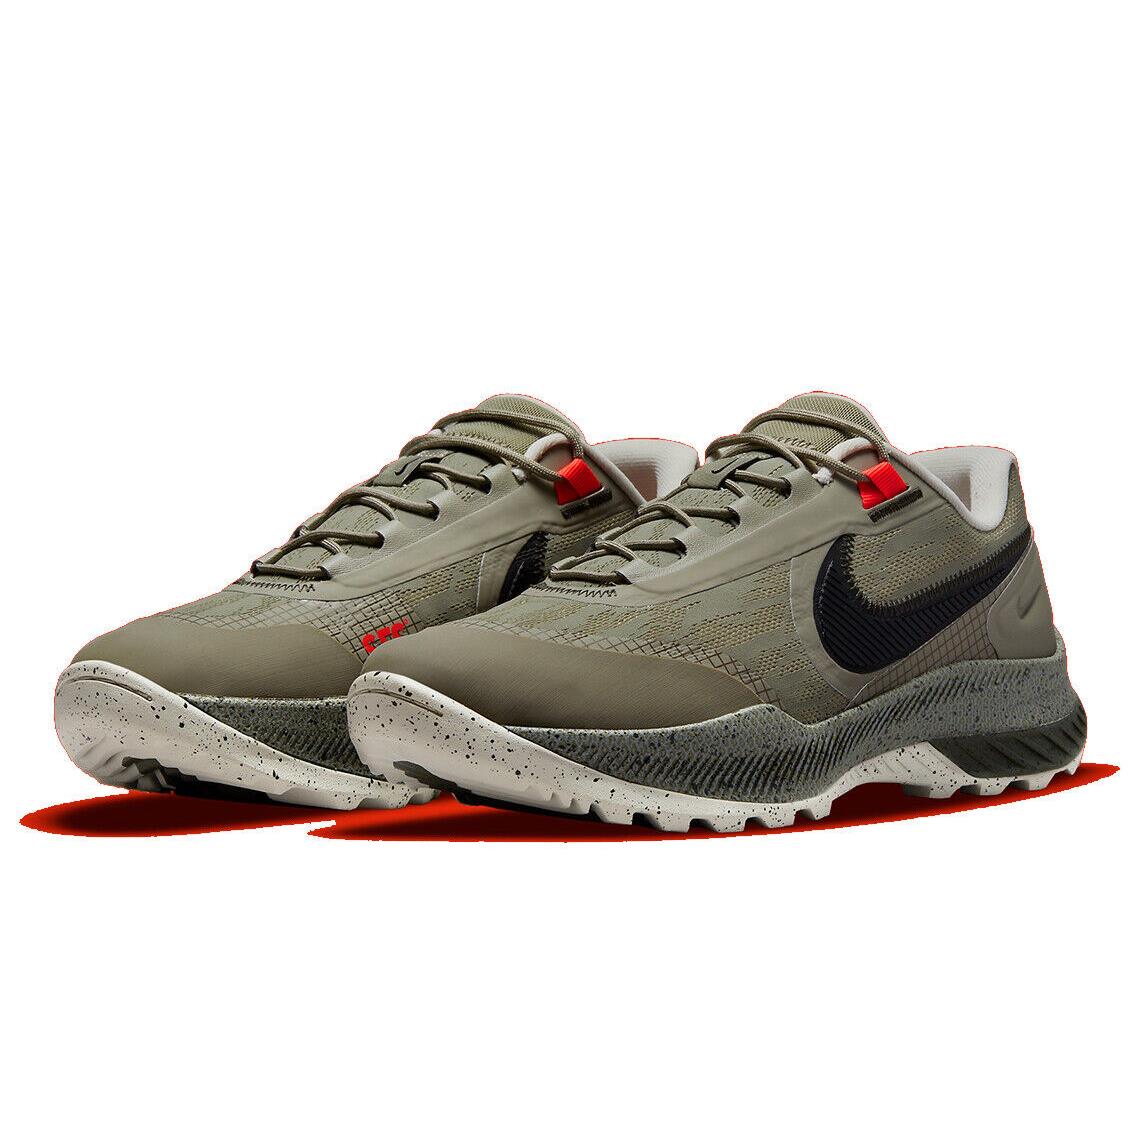 Nike React Sfb Carbon Low Mens Size 8 Sneaker Shoes CZ7399 300 Light Army - Multicolor